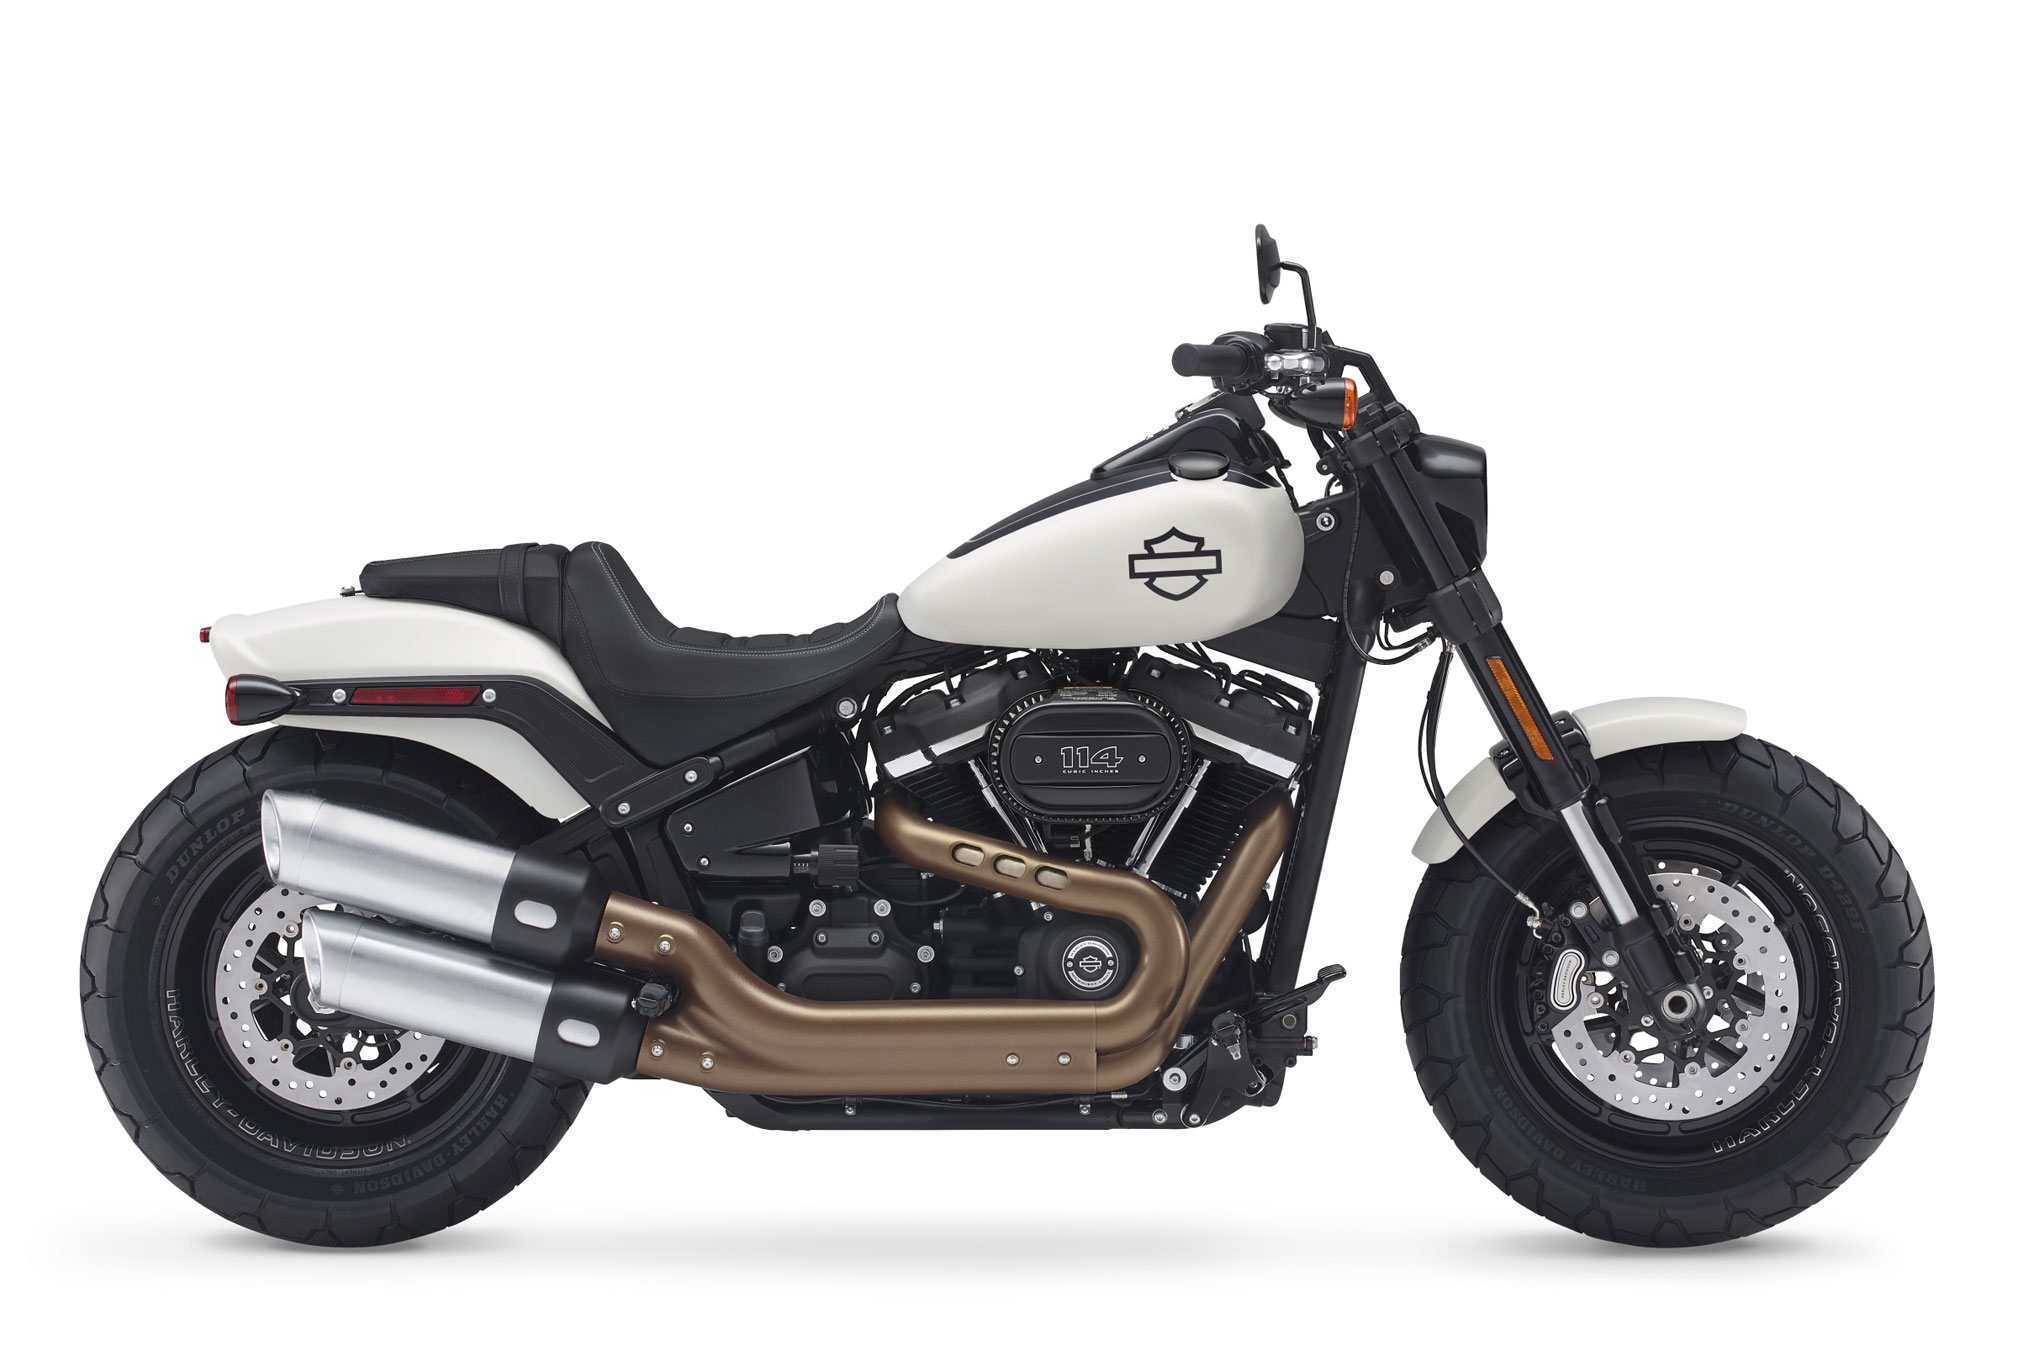 2018 Harley Davidson Fat Bob 114 Review Total Motorcycle